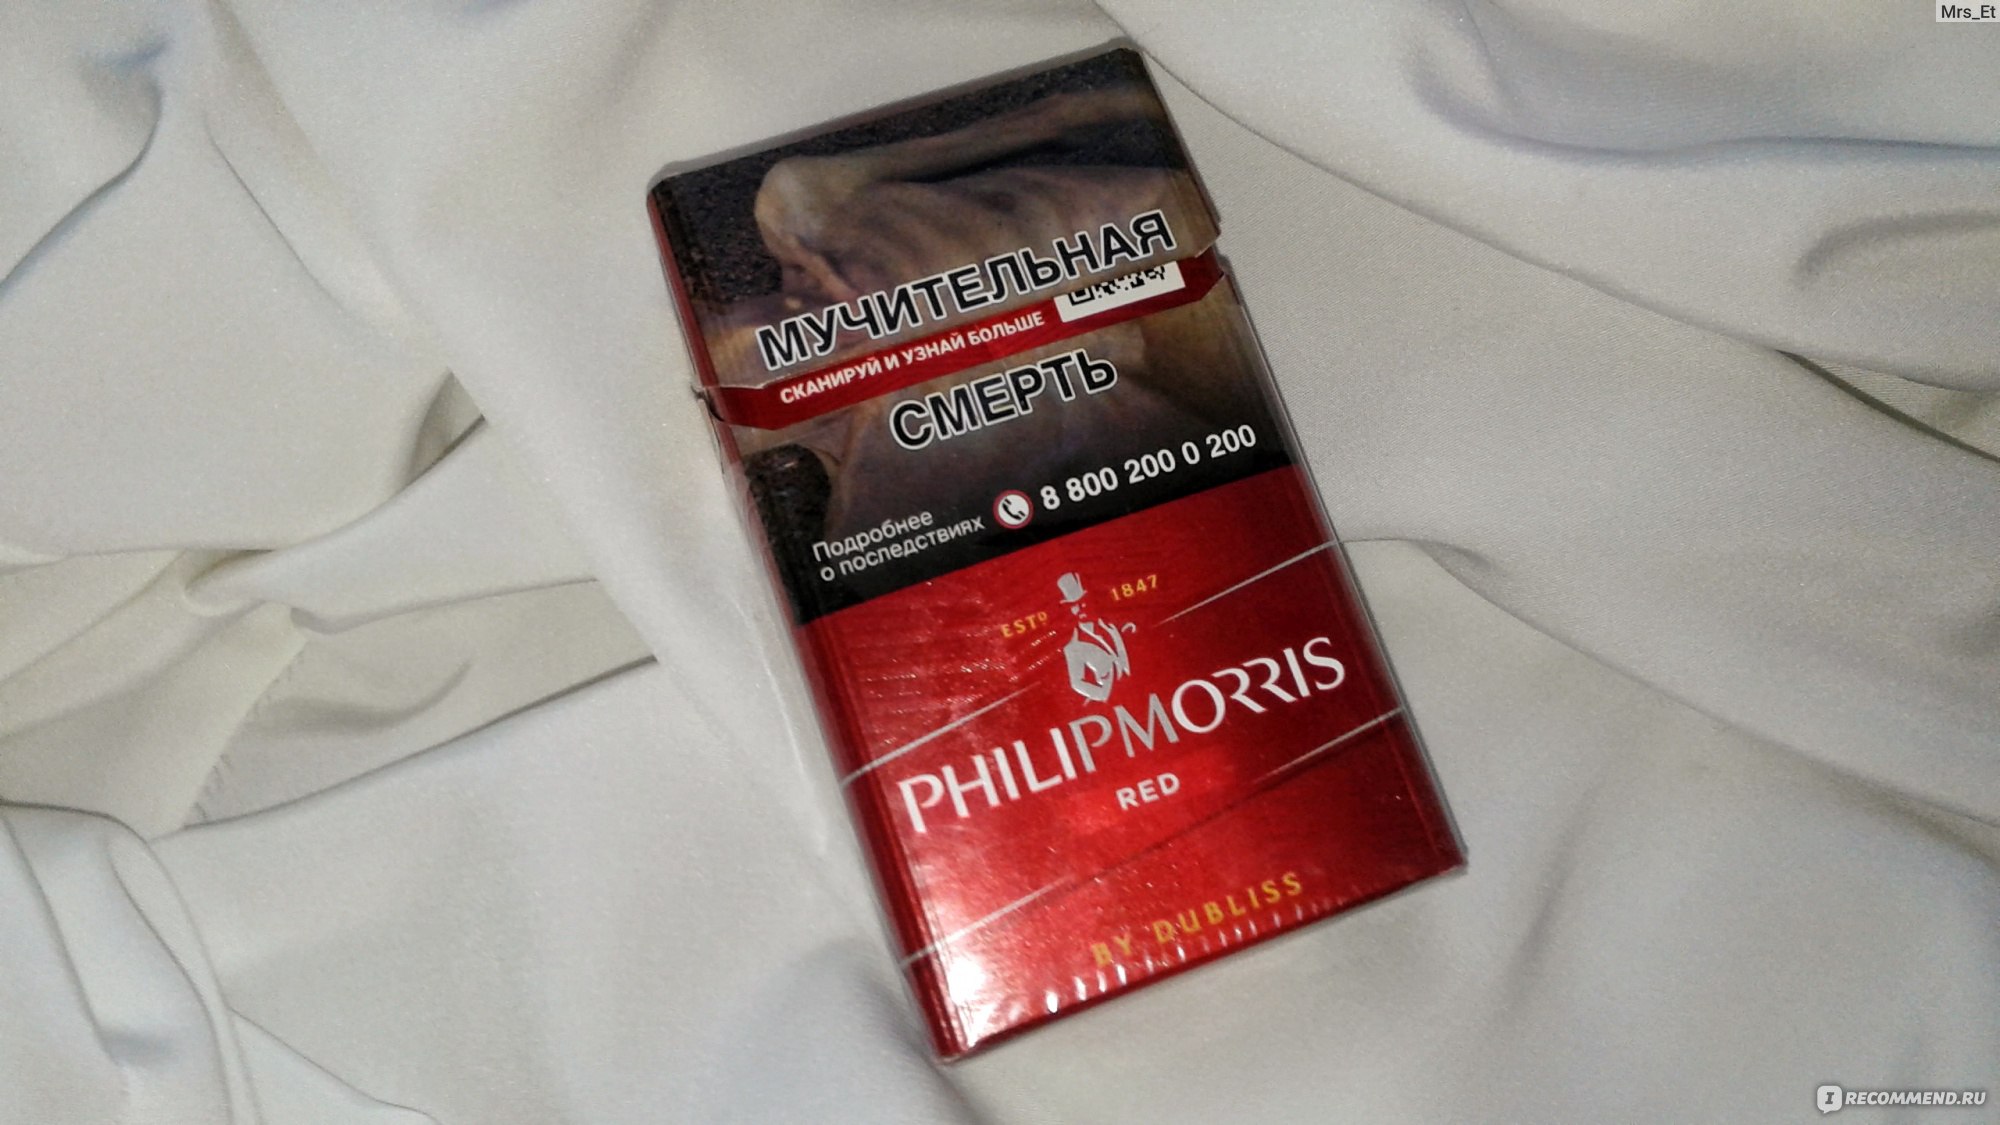 Филлип моррис отзывы. Филипс Морис сигареты красные. Сигареты Филип Моррис ред. Сигареты Philip Morris красный. Филипс Морис красный.